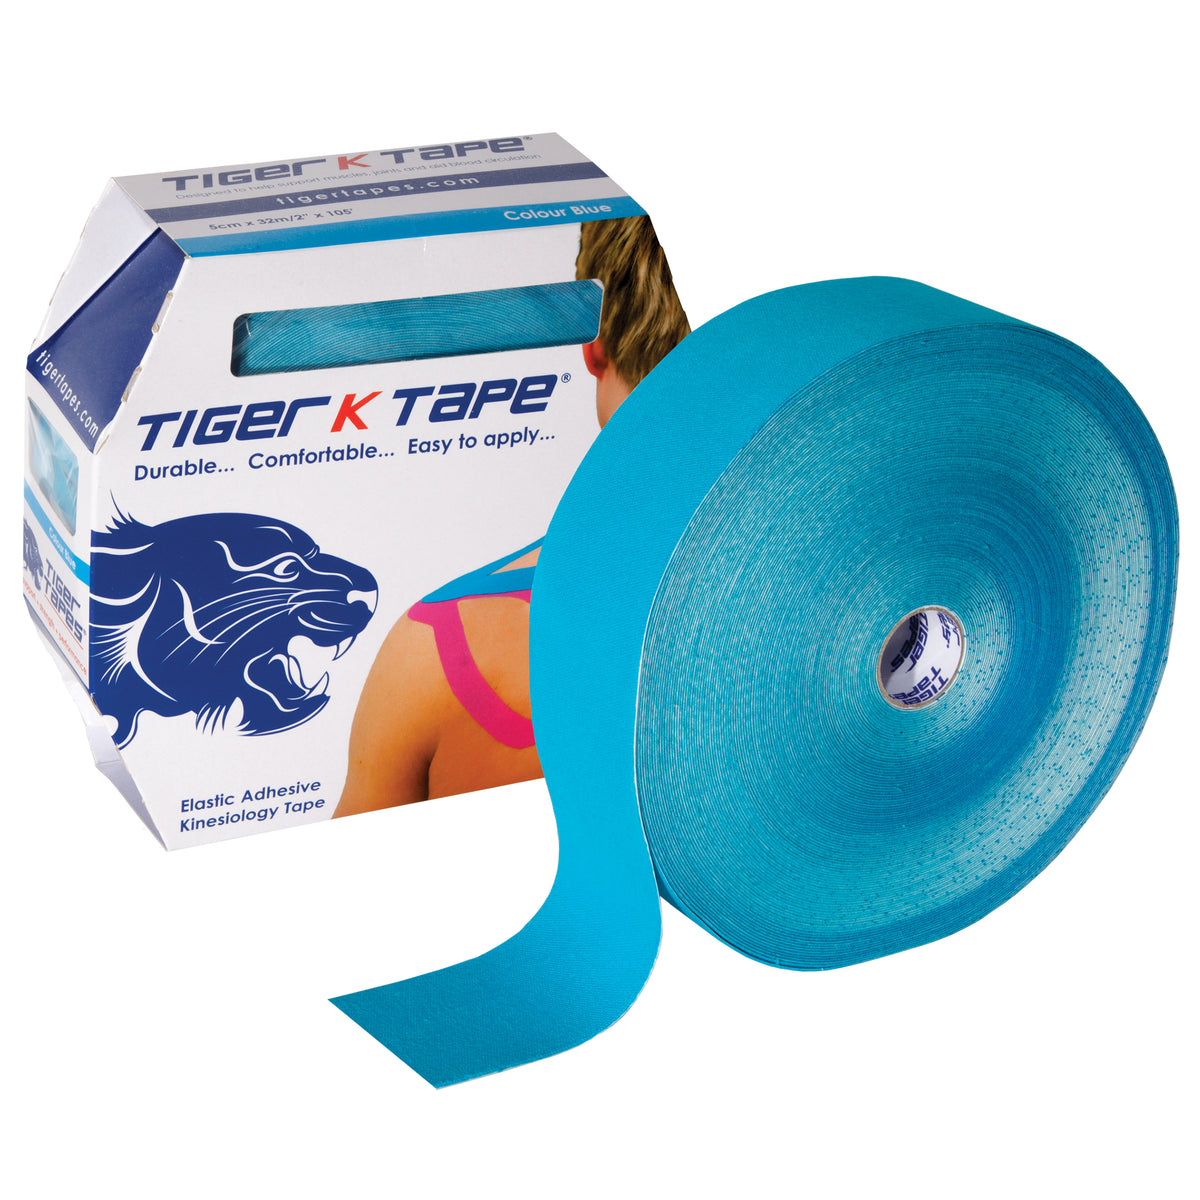 Blue Sports Tape Tiger Tape Cutter